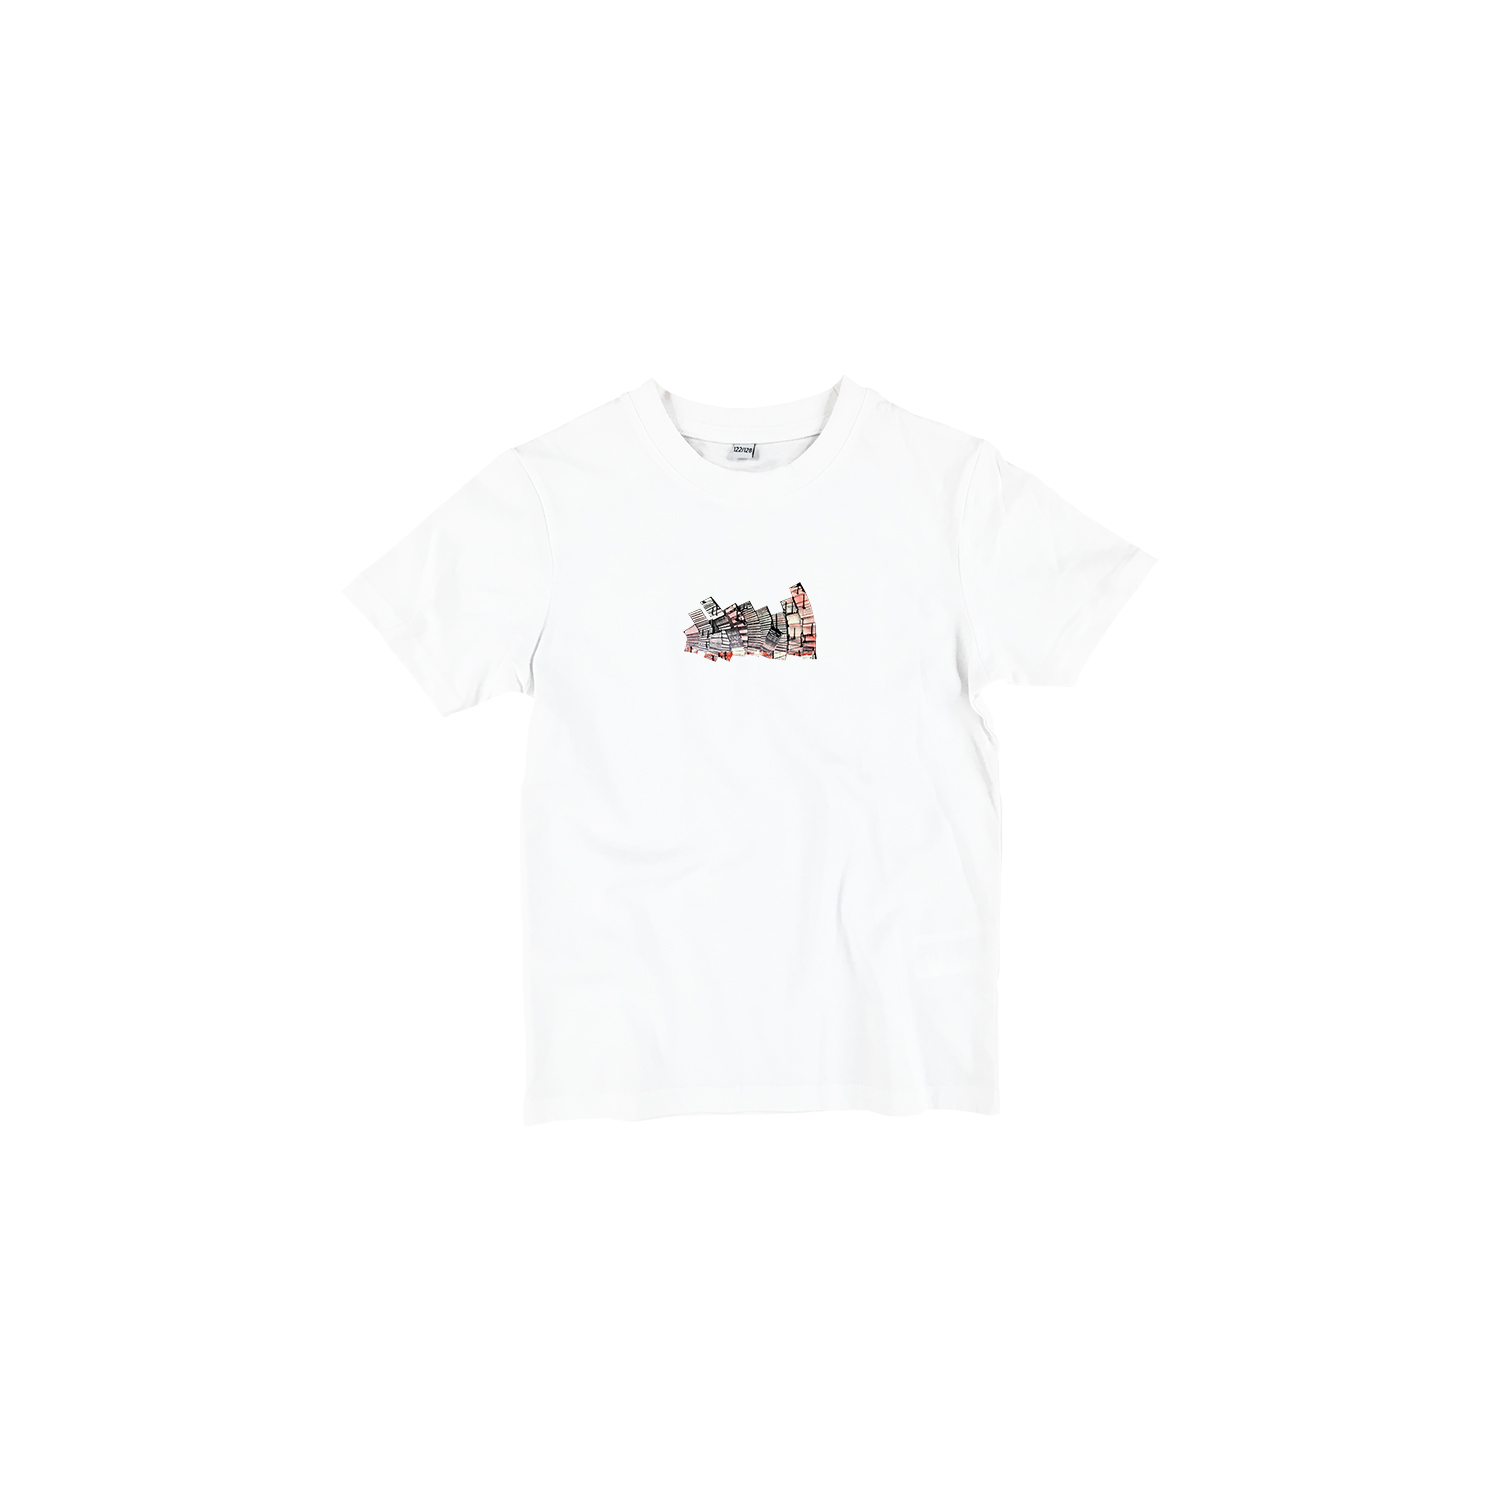 Kids T-shirt - INCLUSIEF-EXCLUSIEF-FLEXIBEL by Ron Vogels – wit